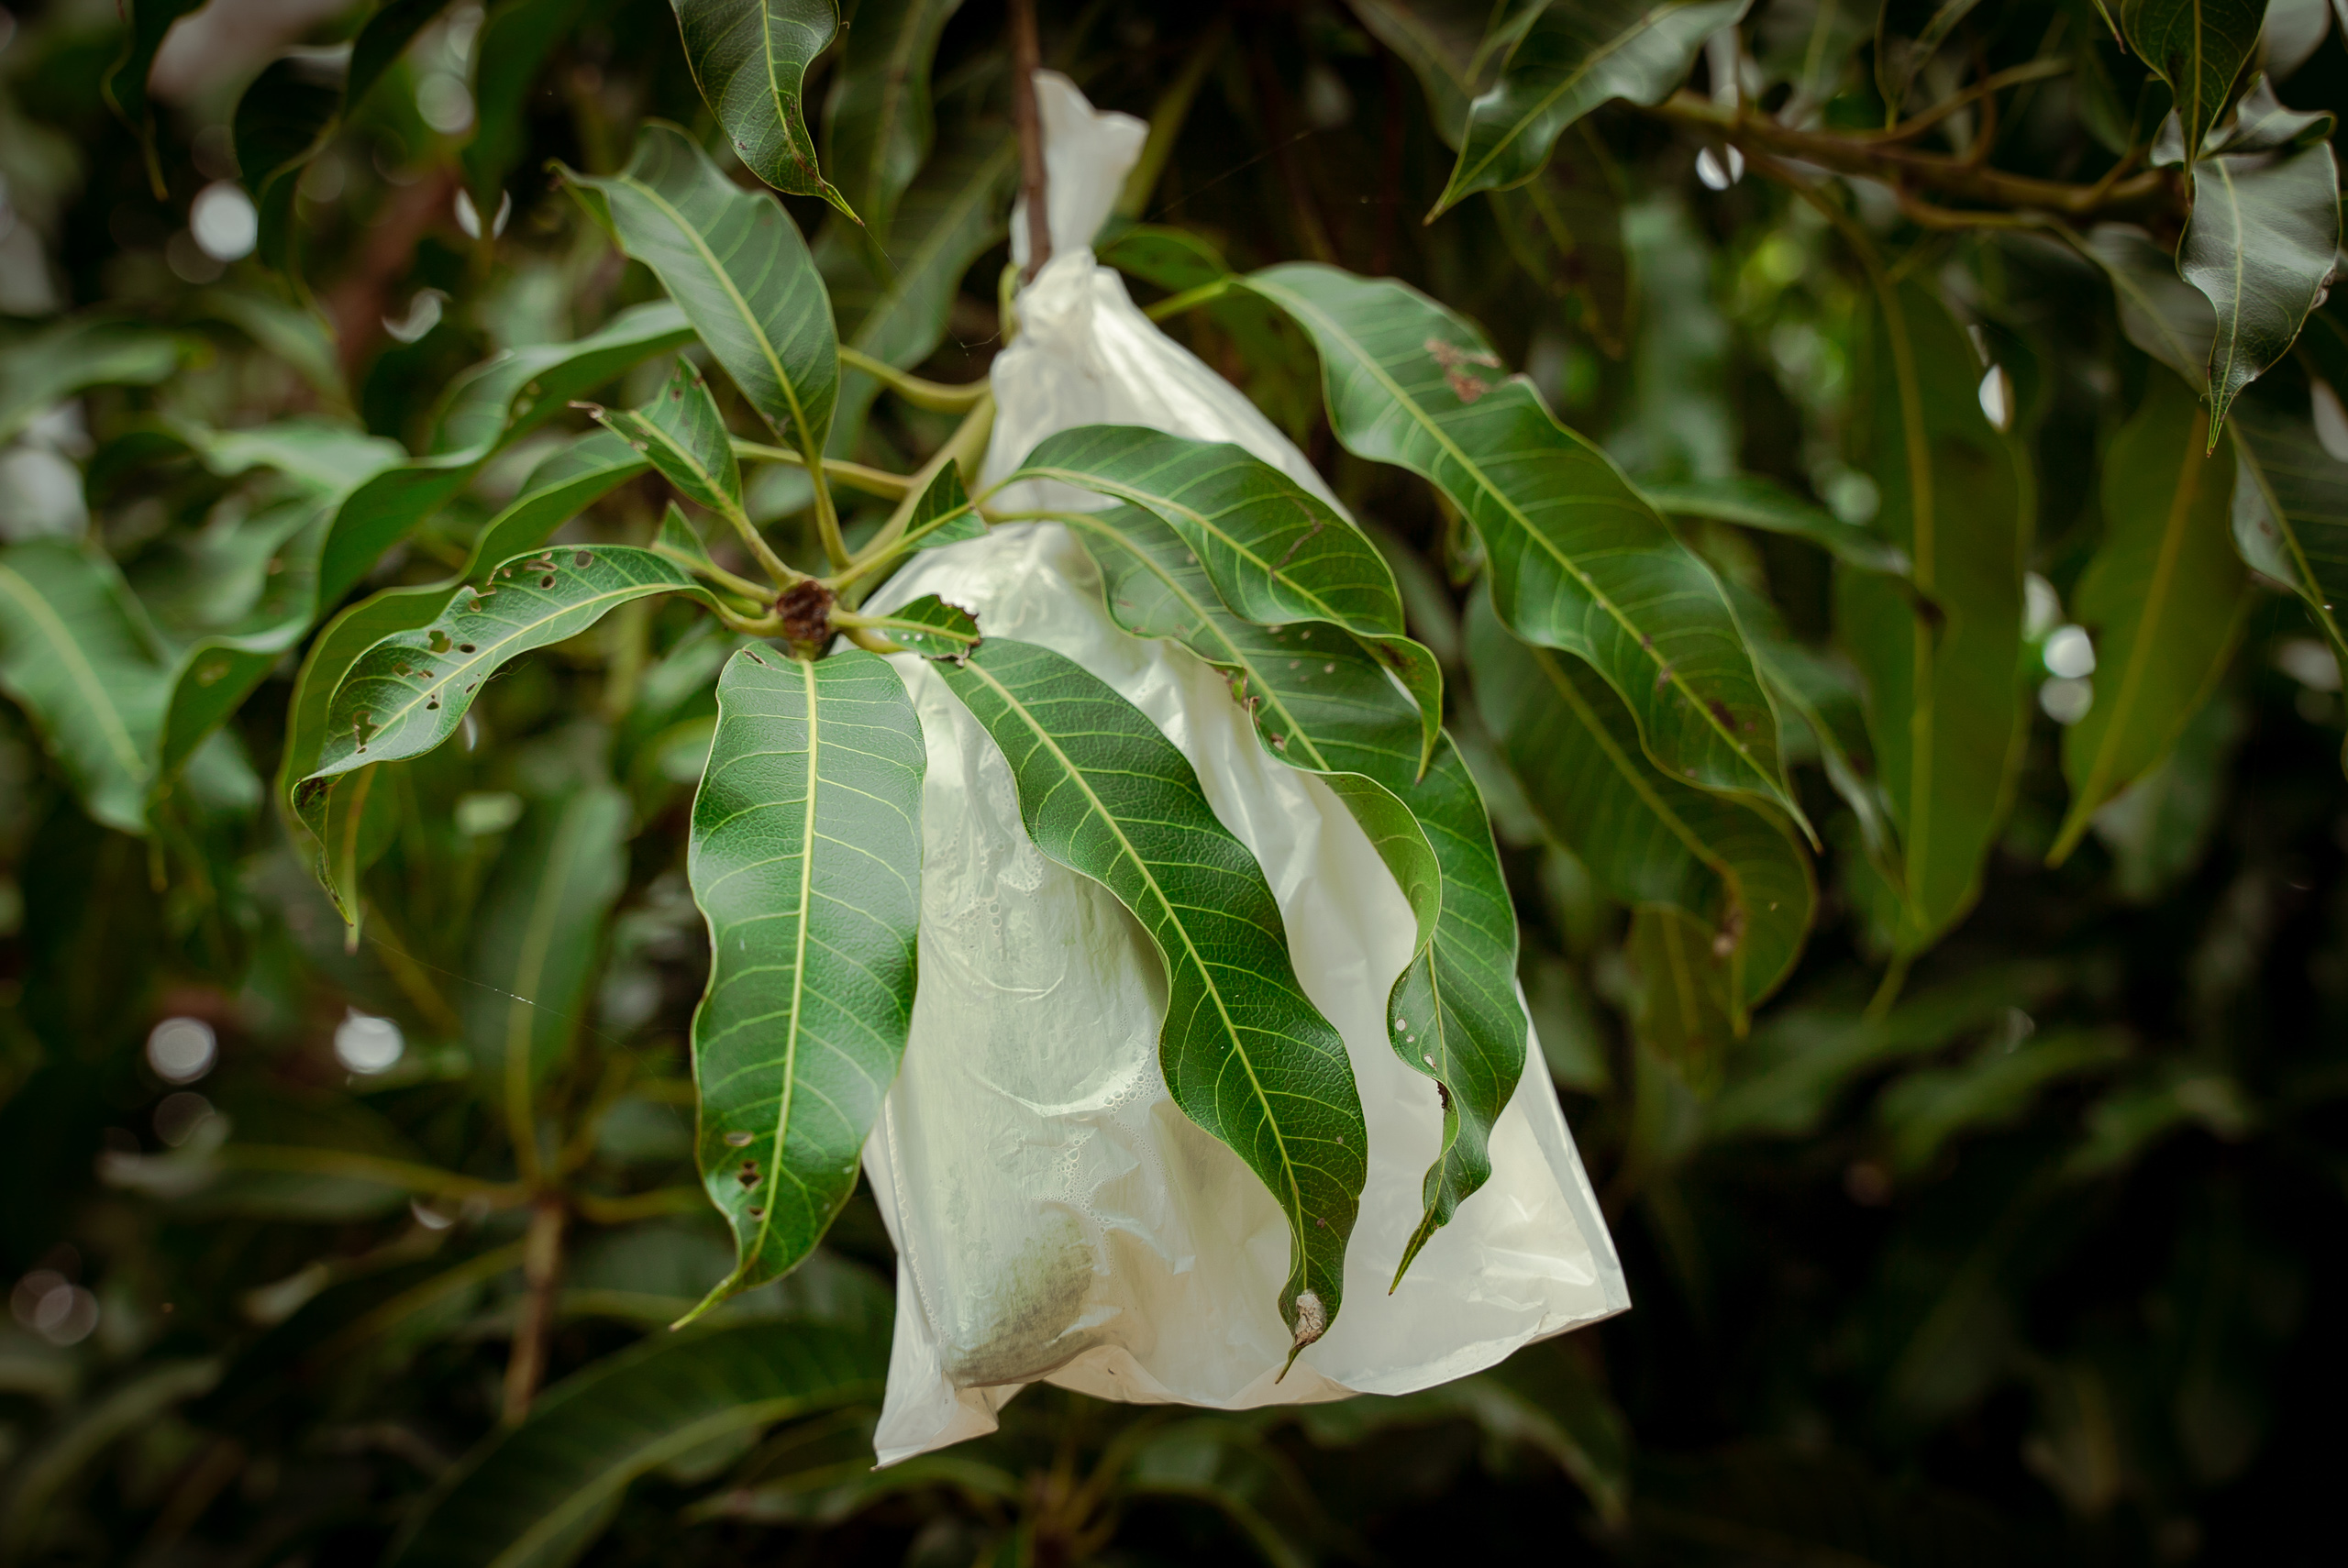 mango enclosed in plastic bag growing on tree